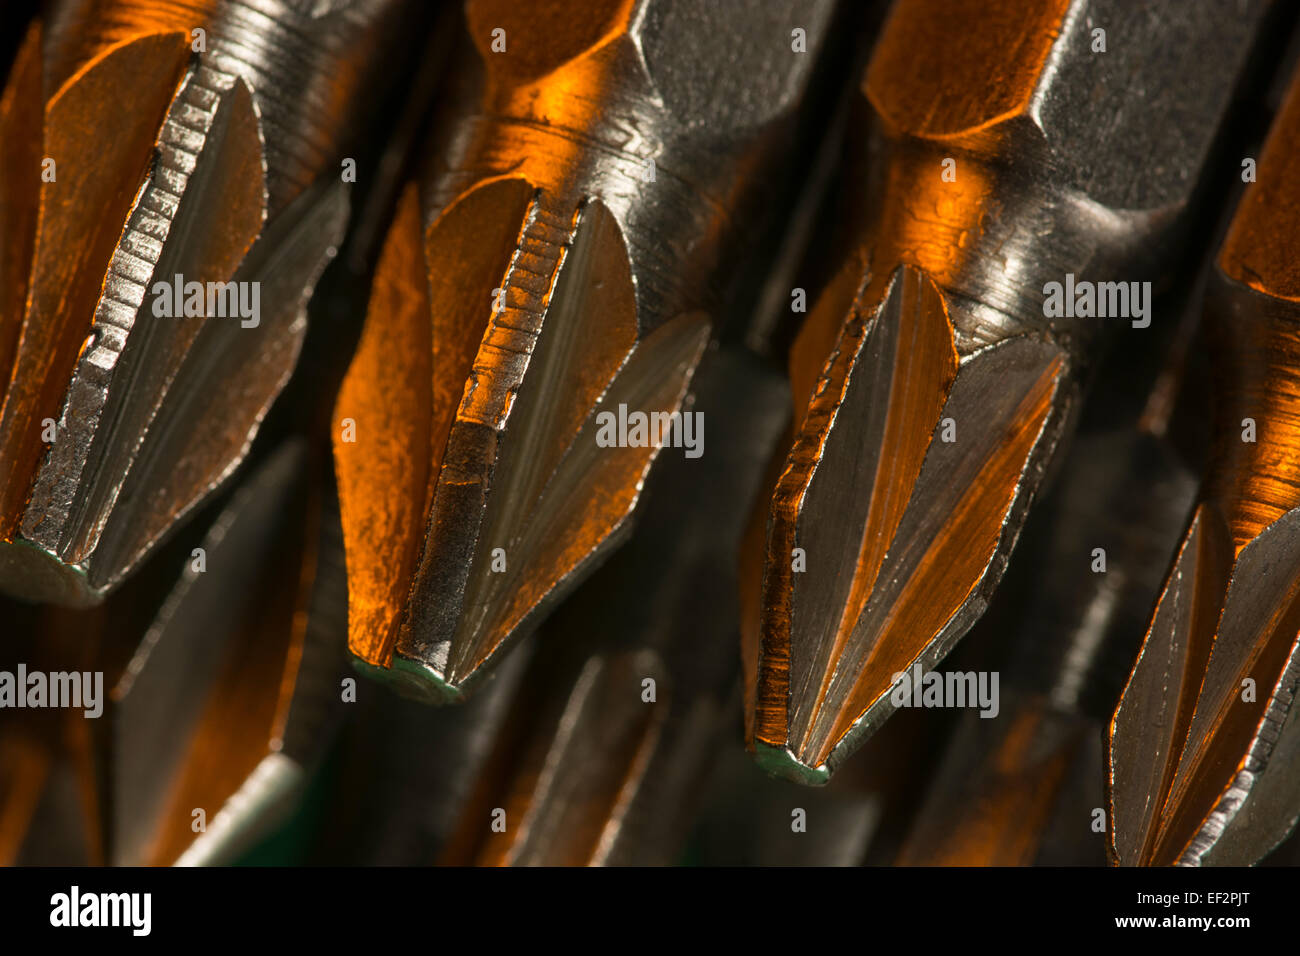 Macro-photo of screwdriver bits. Stock Photo